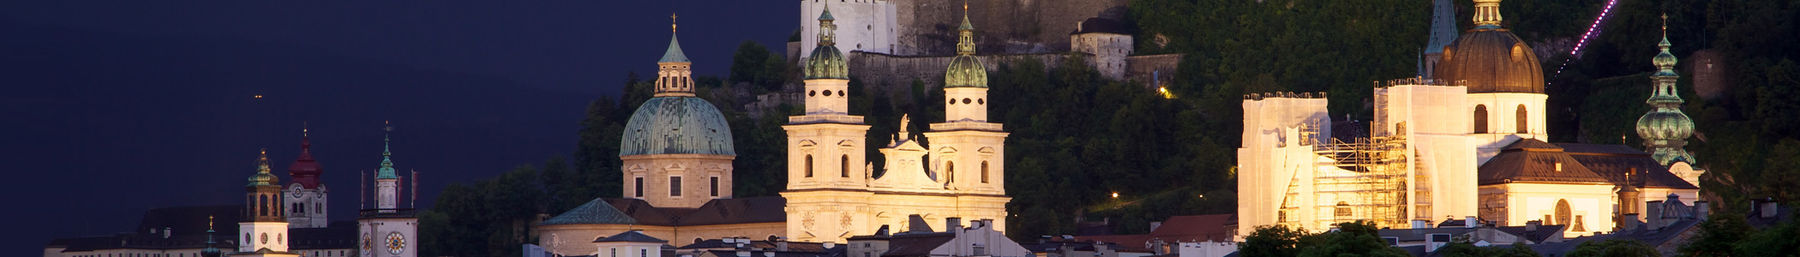 Salzburgi banner.jpg